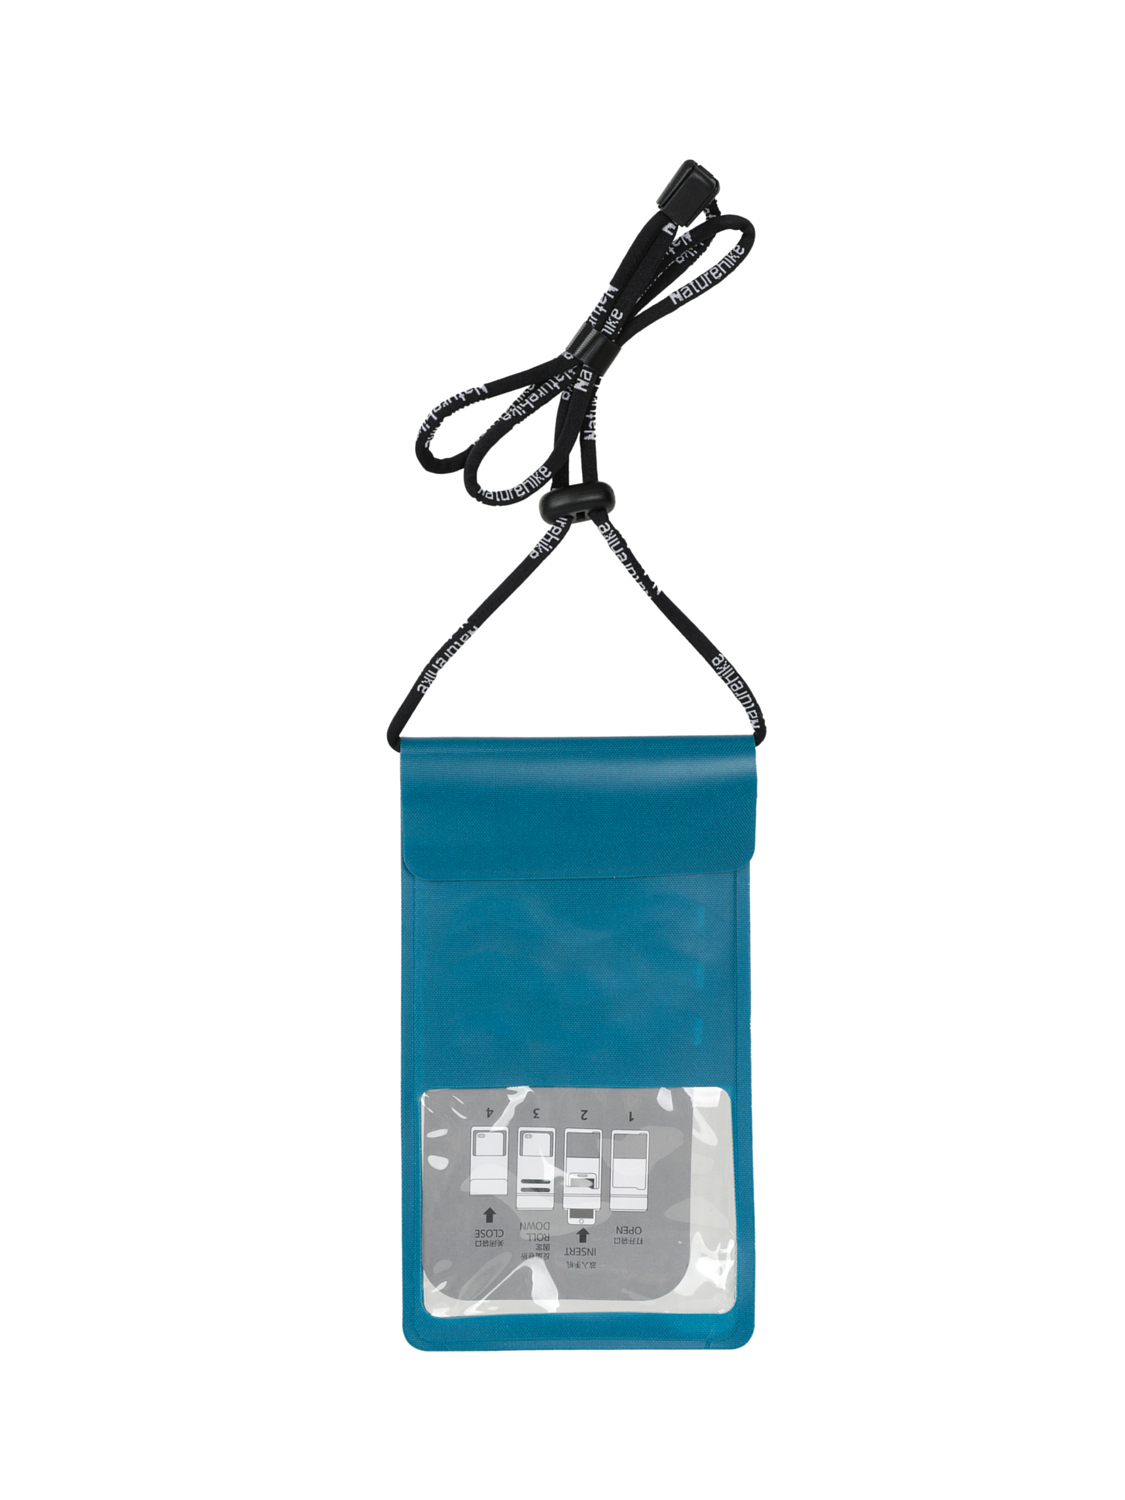 Чехол водонепроницаемый для телефона Naturehike Bag Blue